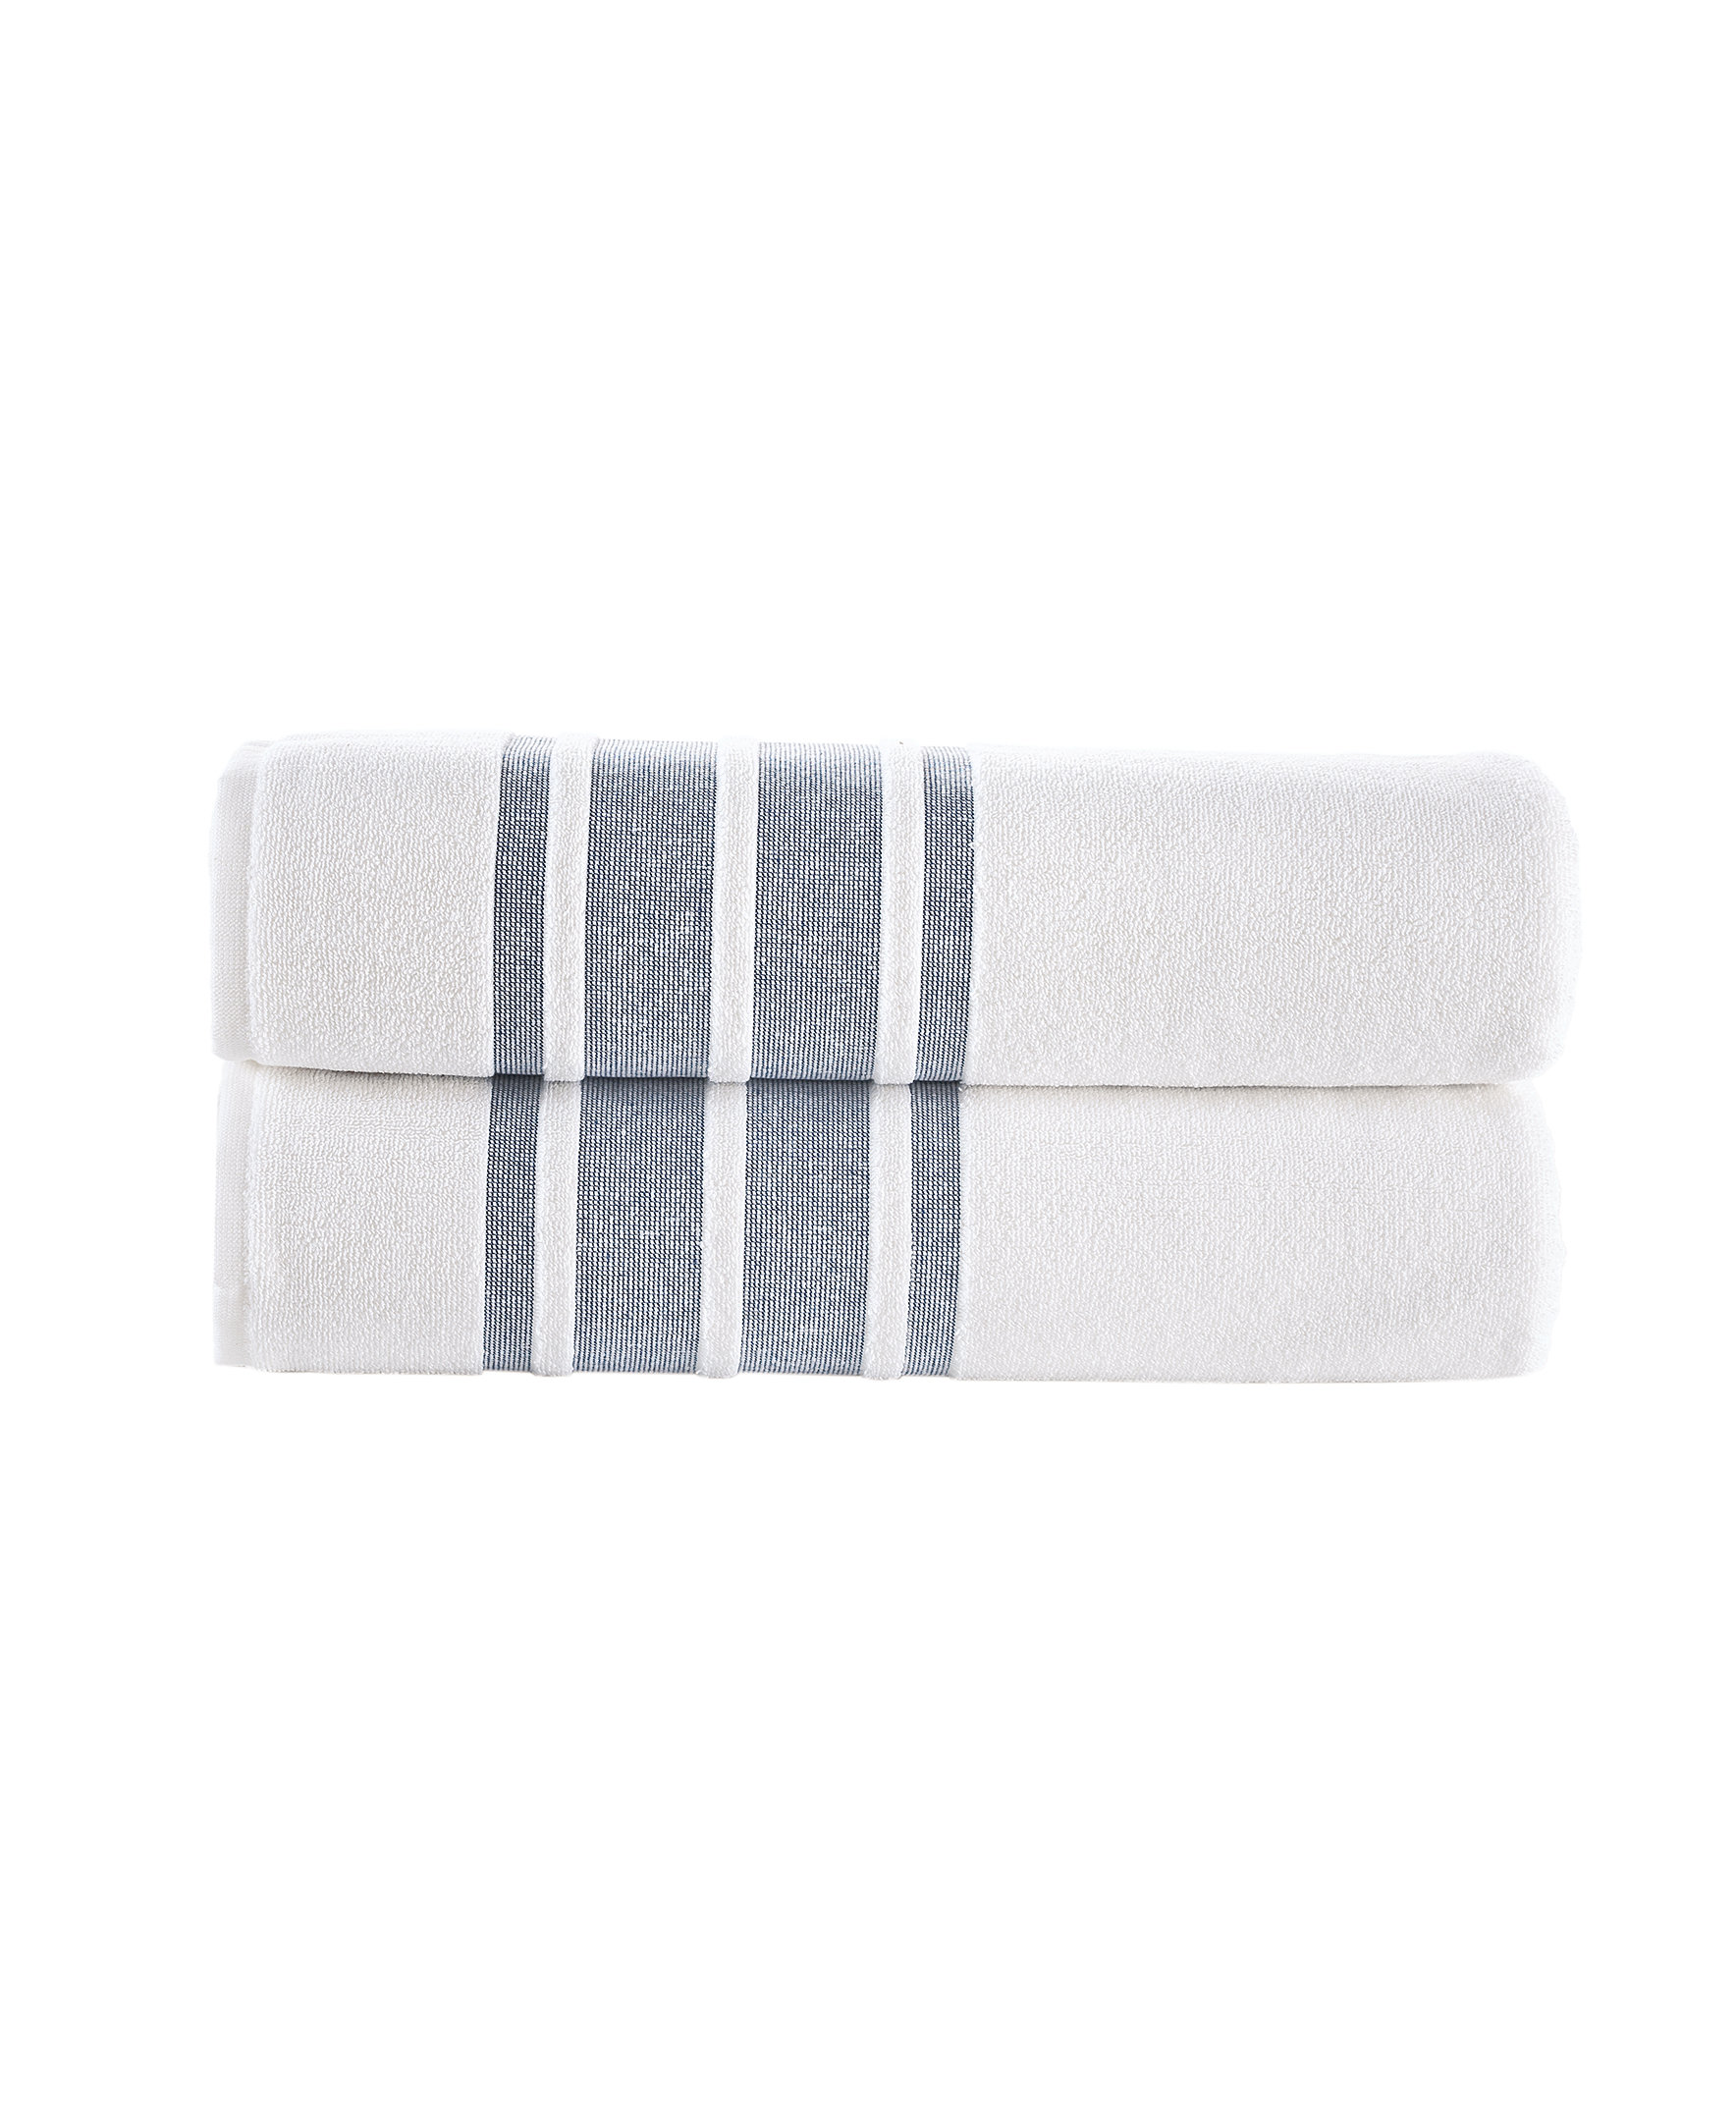 Darcelle 100% Turkish Cotton 35x70 Jumbo Bath Sheet Charlton Home Color: Navy Blue